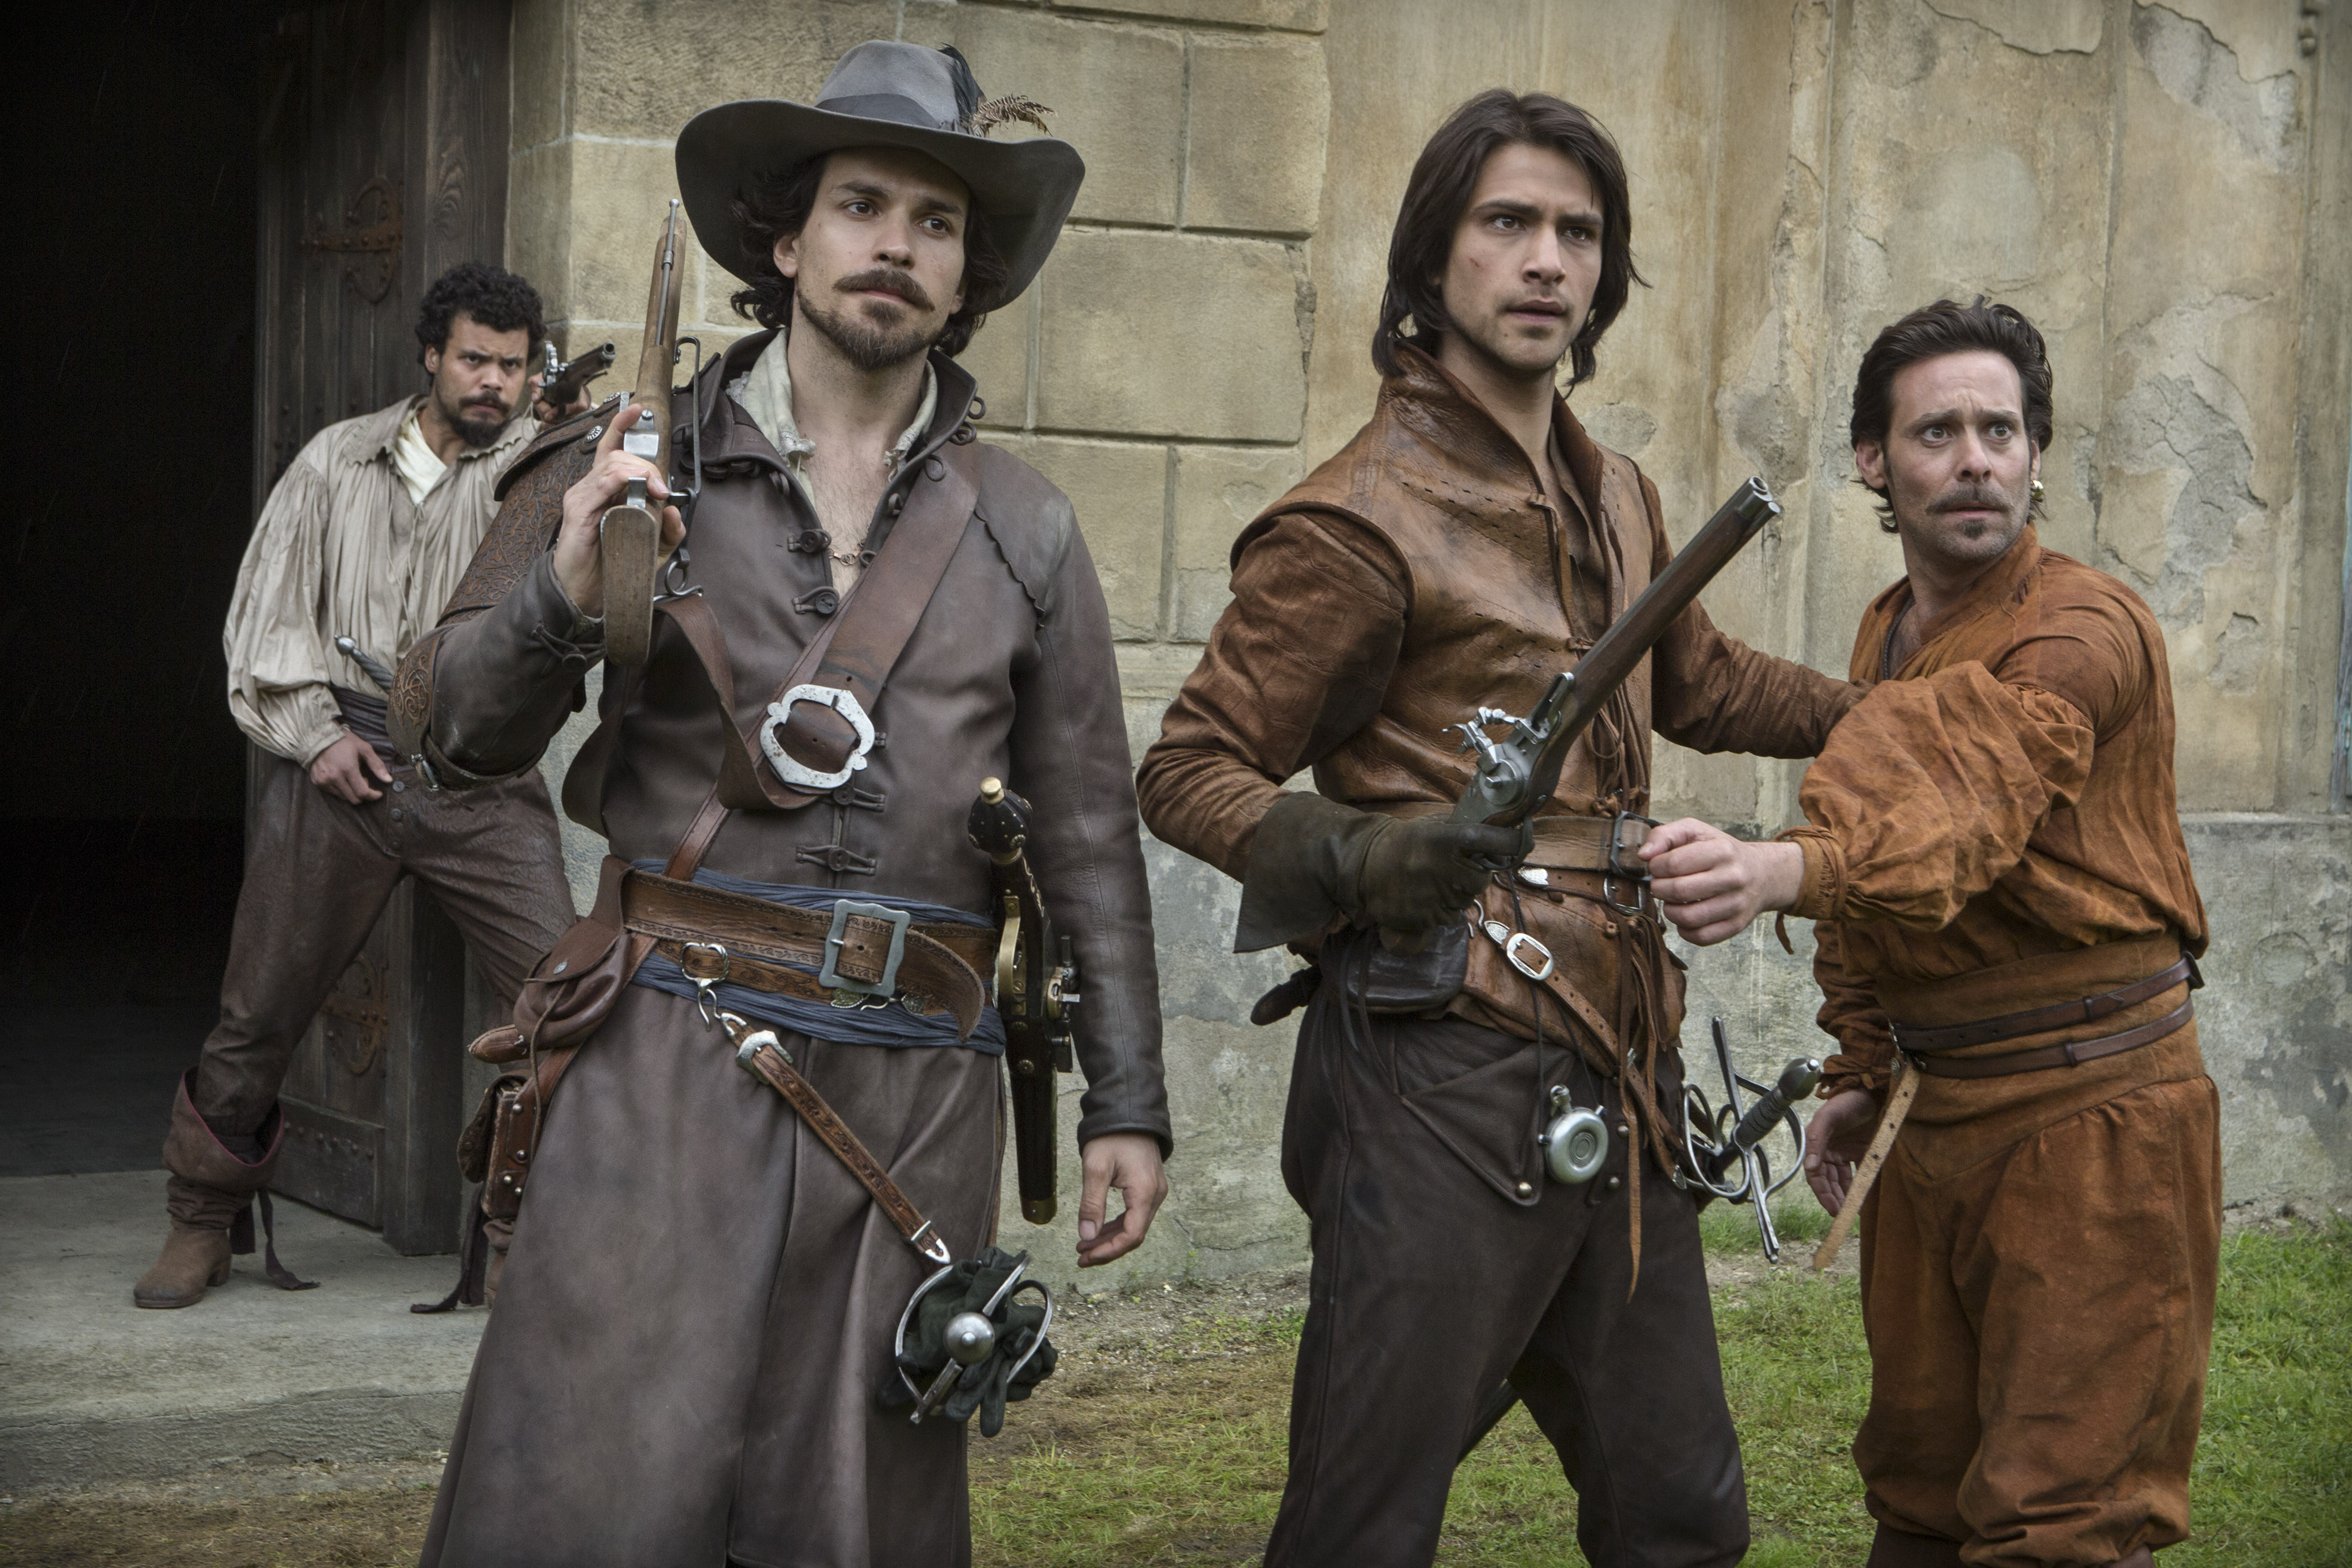 The Three Musketeers: D'Artagnan Wallpaper